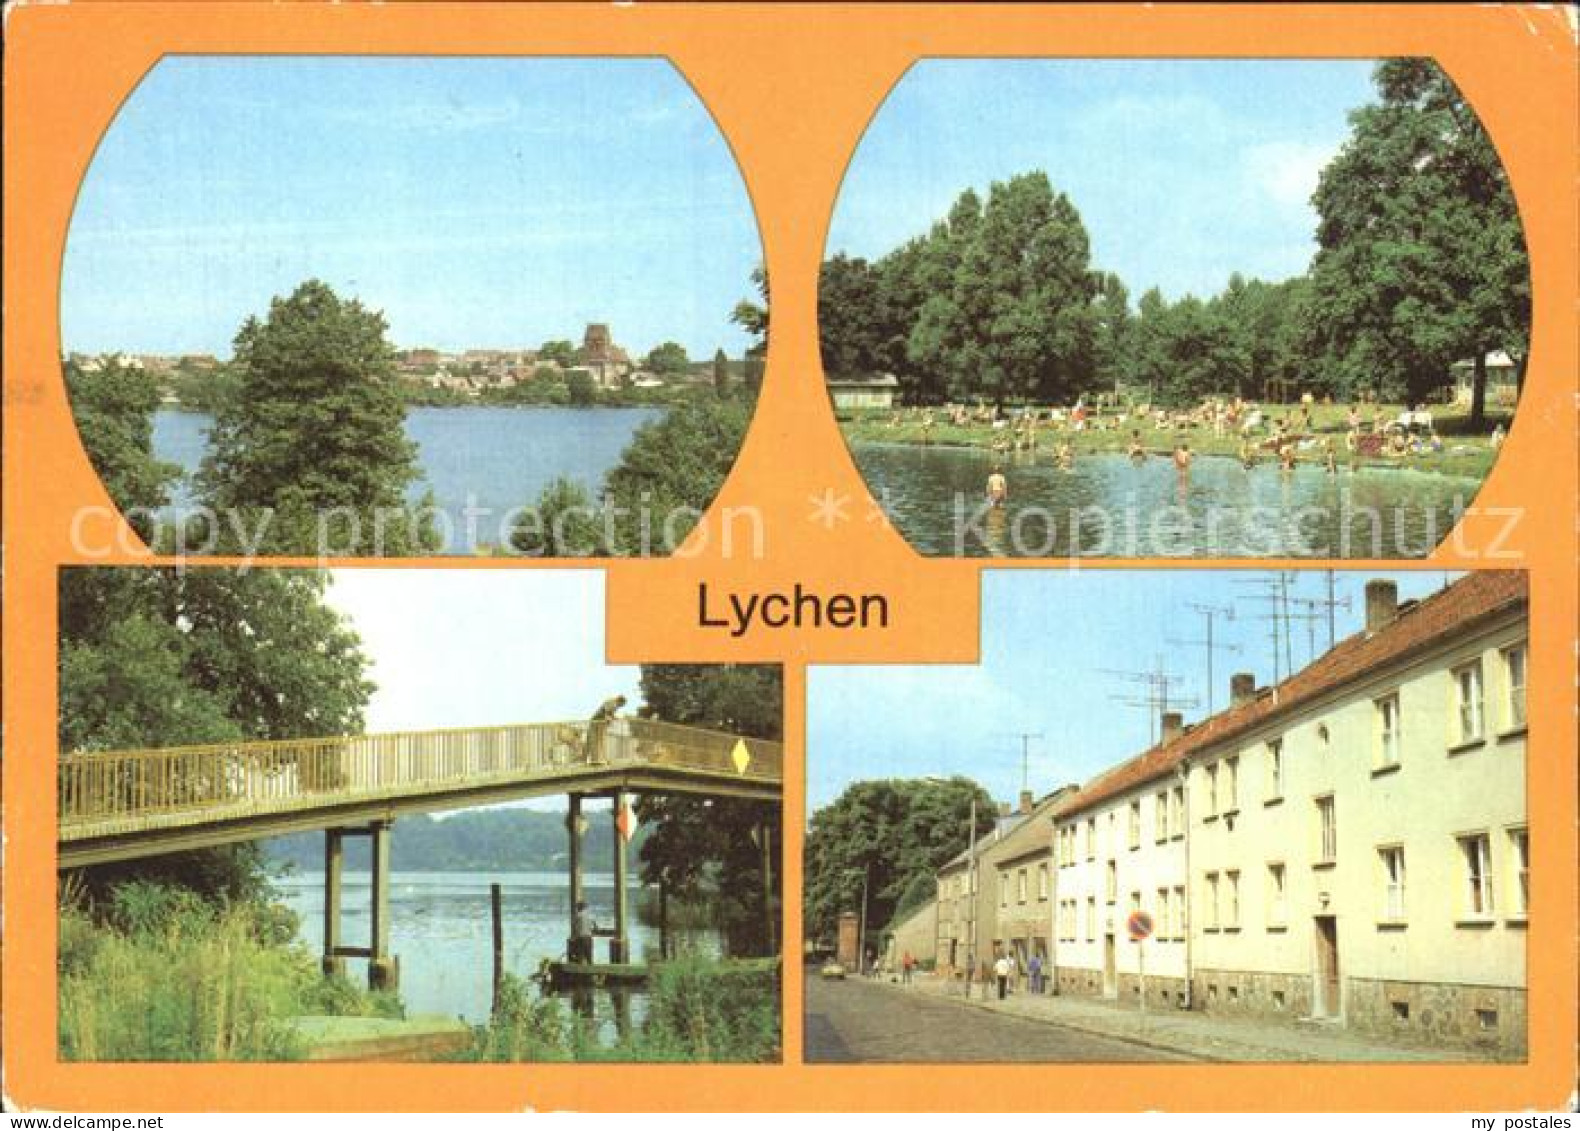 72285827 Lychen Stadtsee Strandbad Grosser Lychensee Fussgaengerbruecke Fuersten - Lychen